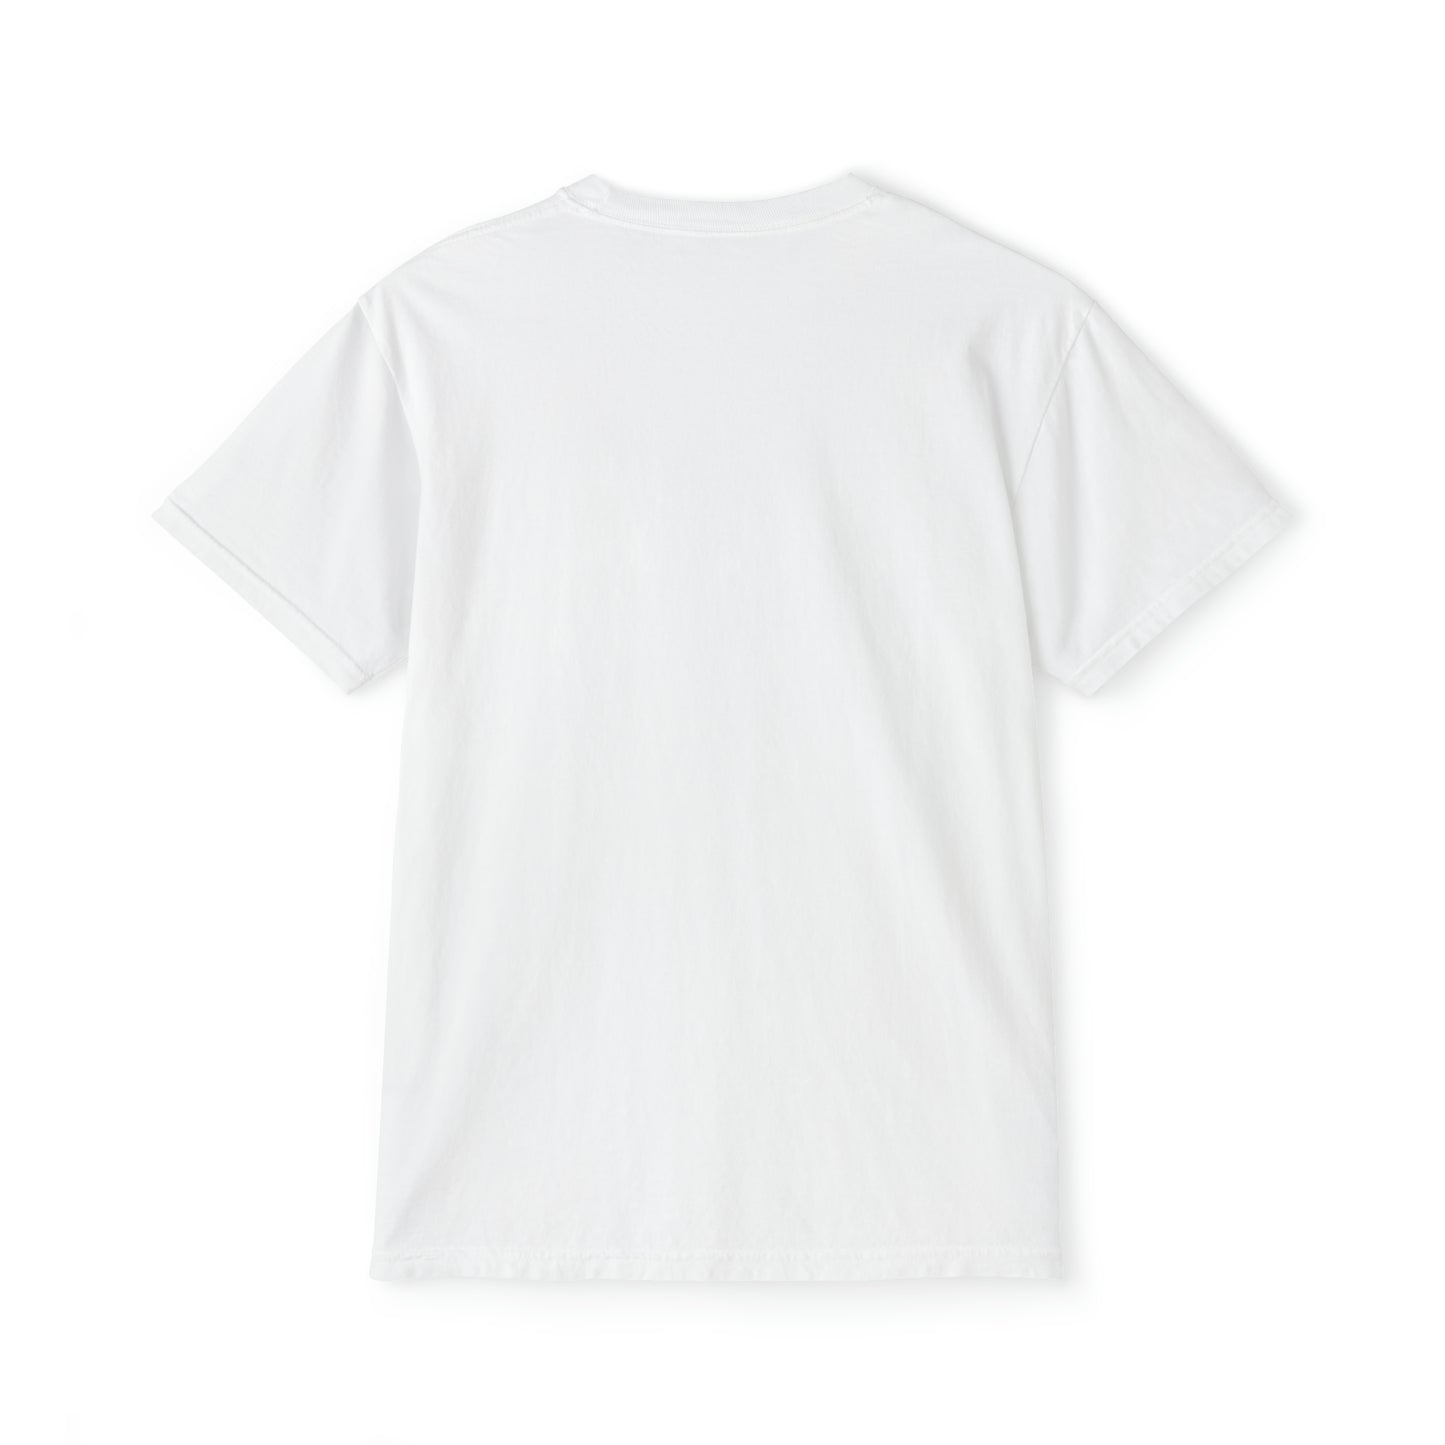 Unisex Garment-Dyed Pocket T-Shirt Printify Pikolelie (pee-koh-lay-lee) Activewear T-Shirt